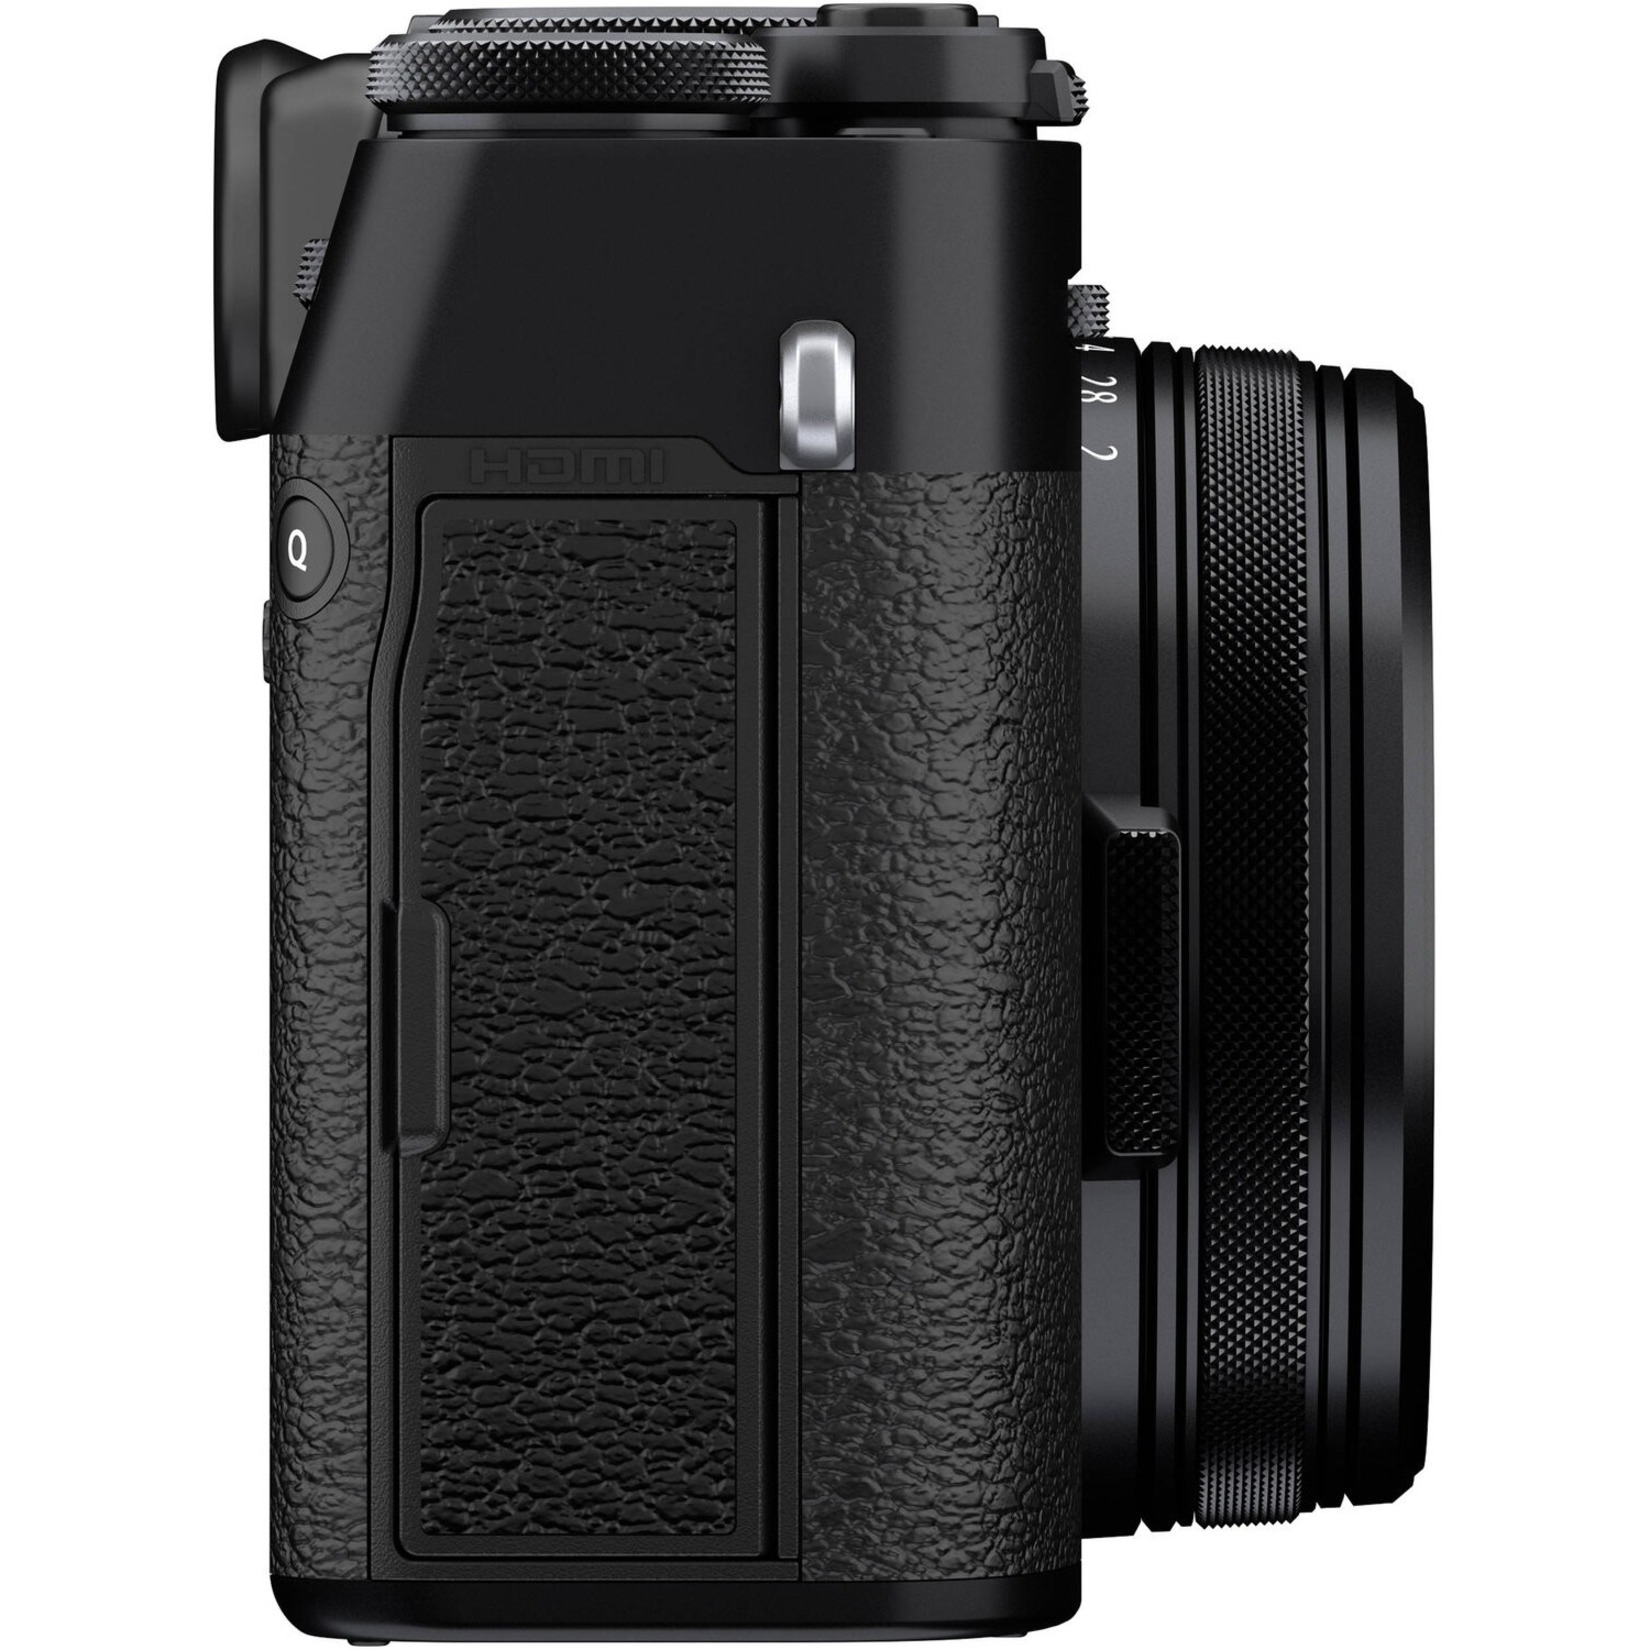 Fujifilm X100V 26.1 Megapixel Compact Camera, Black - image 2 of 9